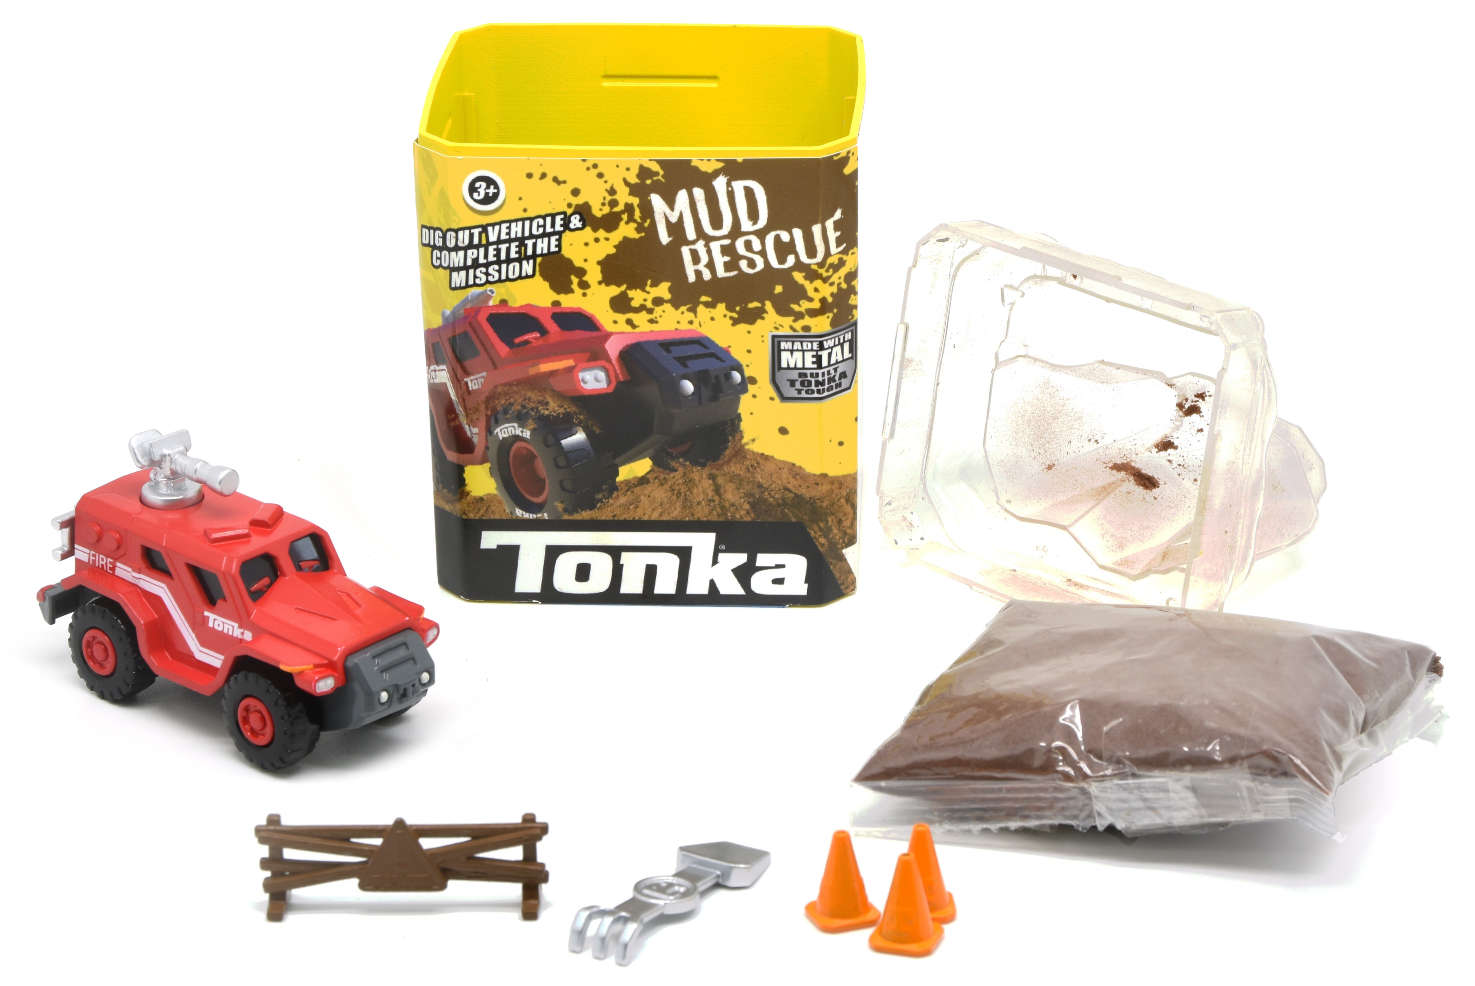 Tonka Mud Rescue Red Jeep autko + piasek